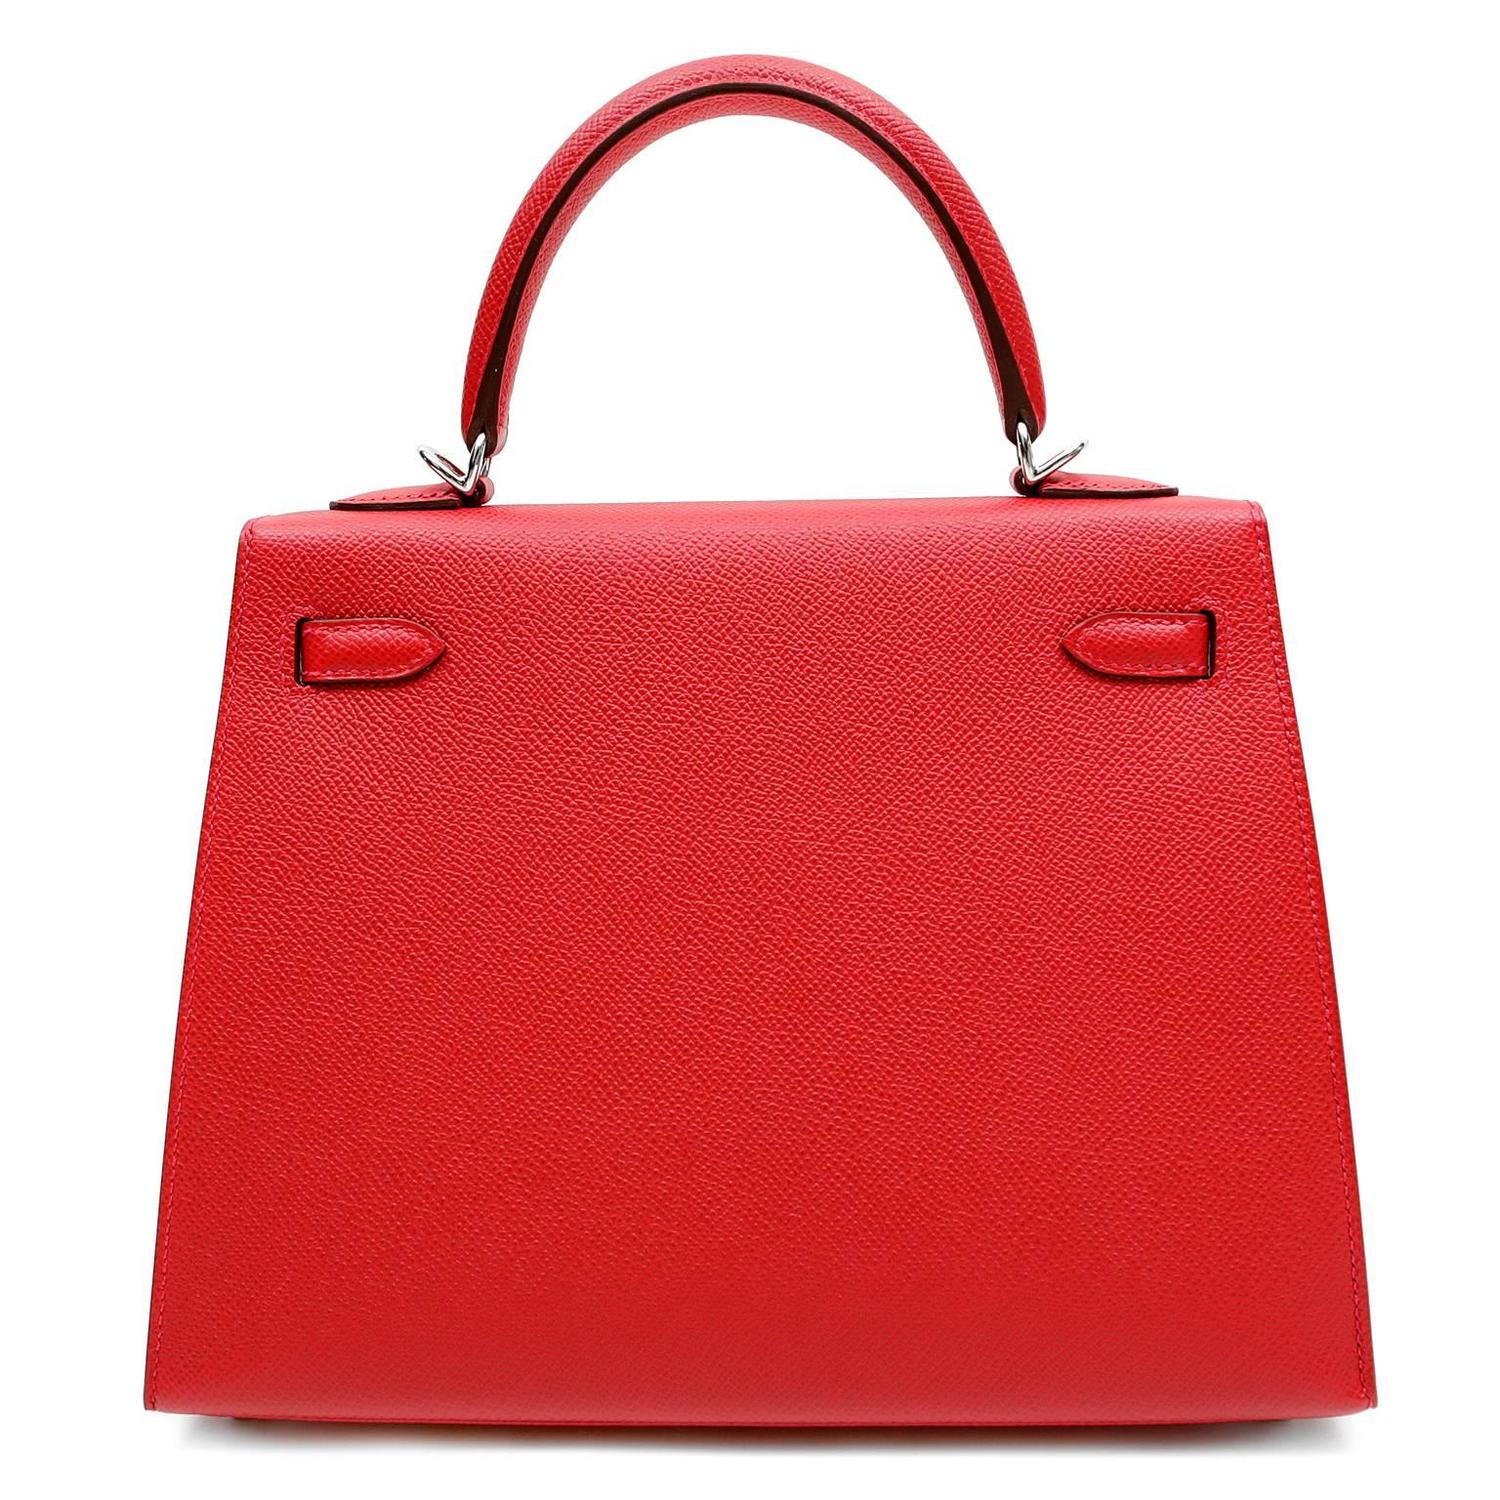 New Iconic Hermès Kelly bag - SeaChange | Oceana